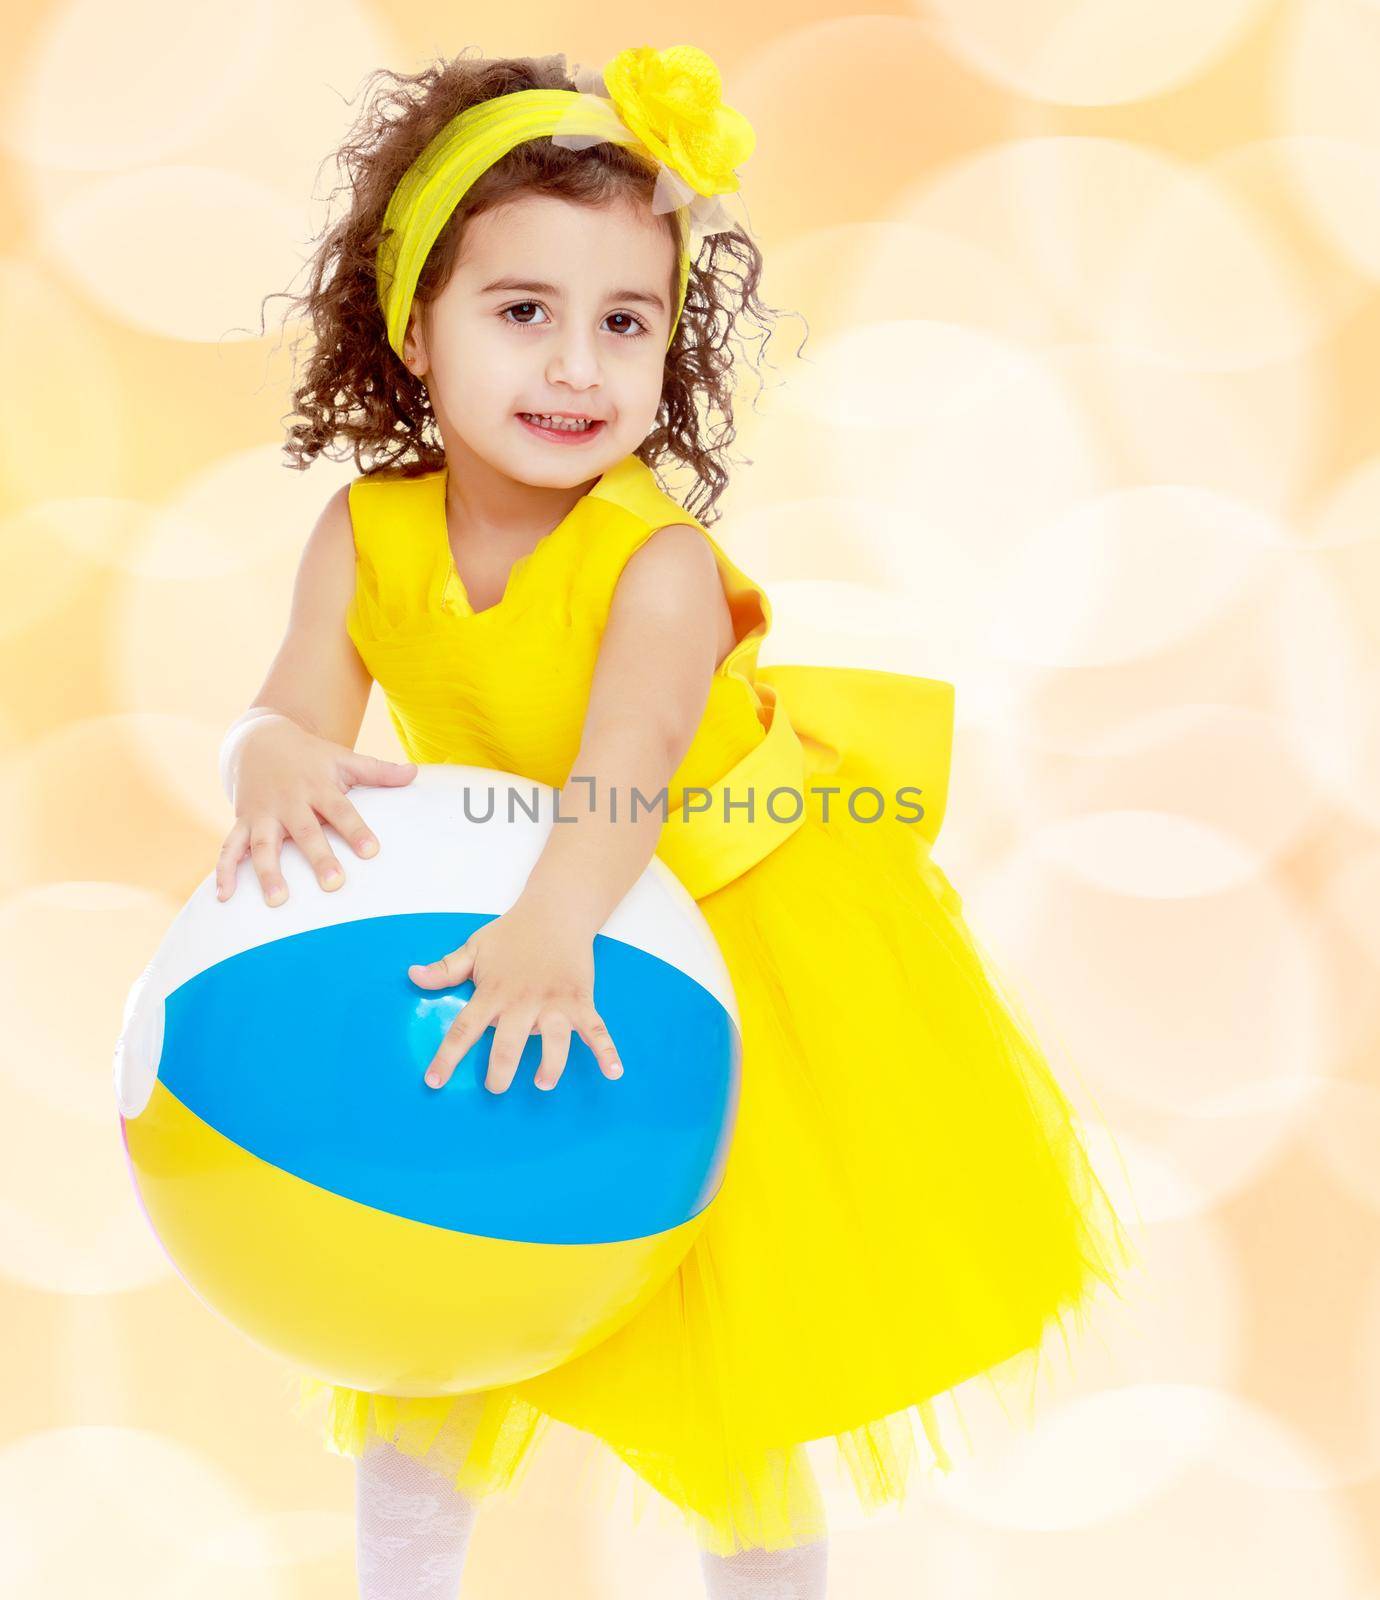 Little girl in yellow dress holding a ball by kolesnikov_studio